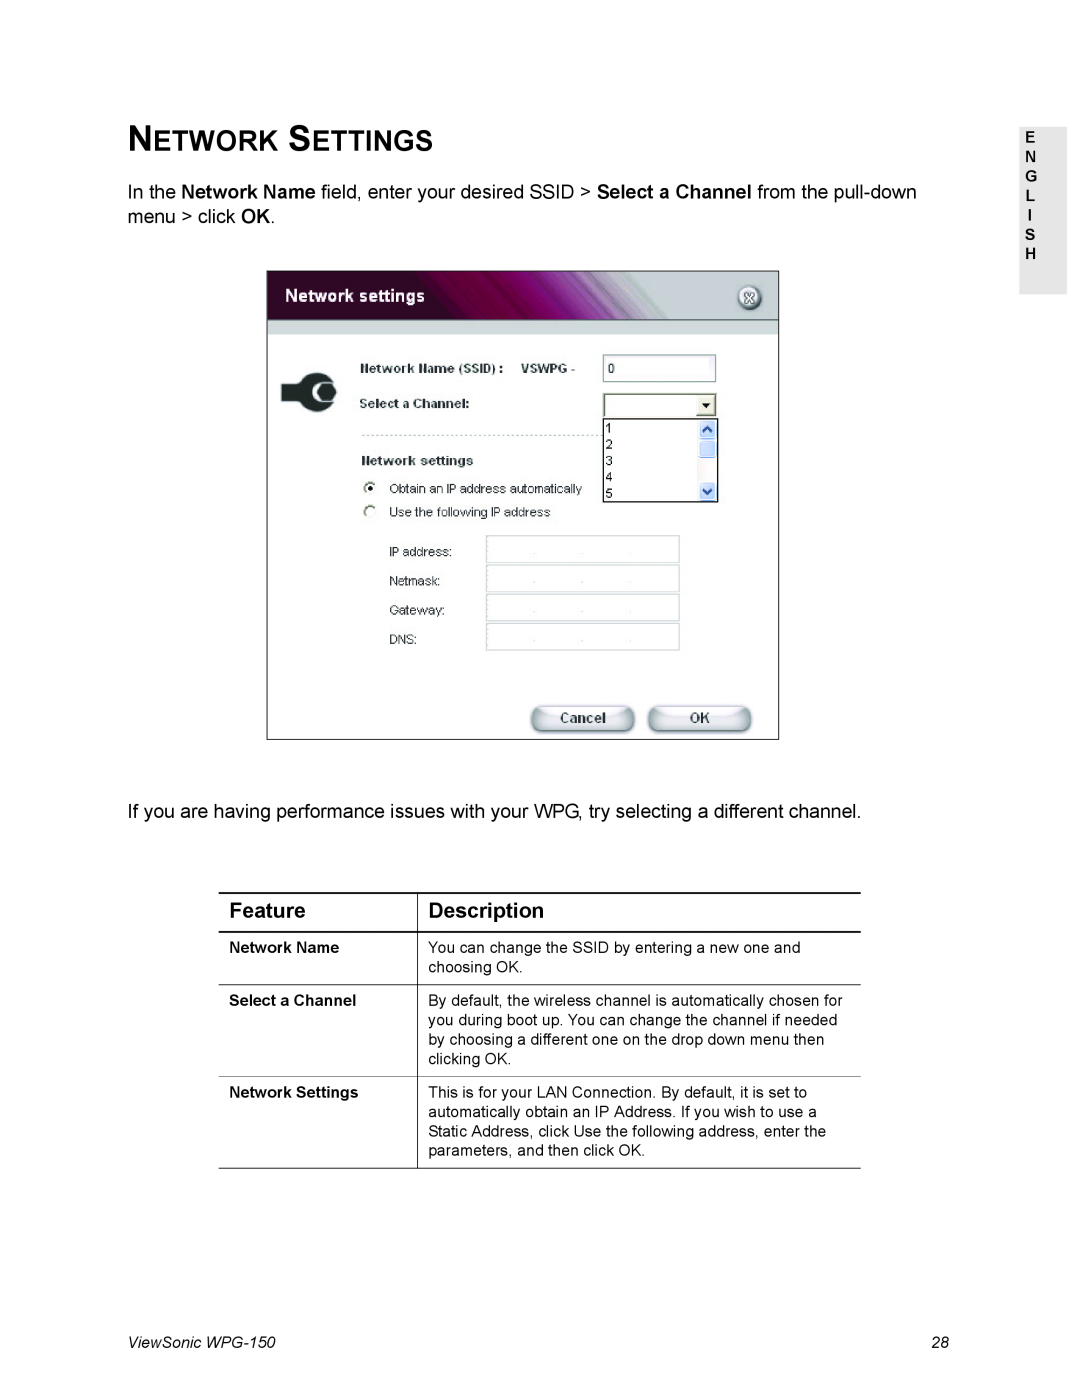 ViewSonic WPG-150 manual Network Settings, Feature, Description 